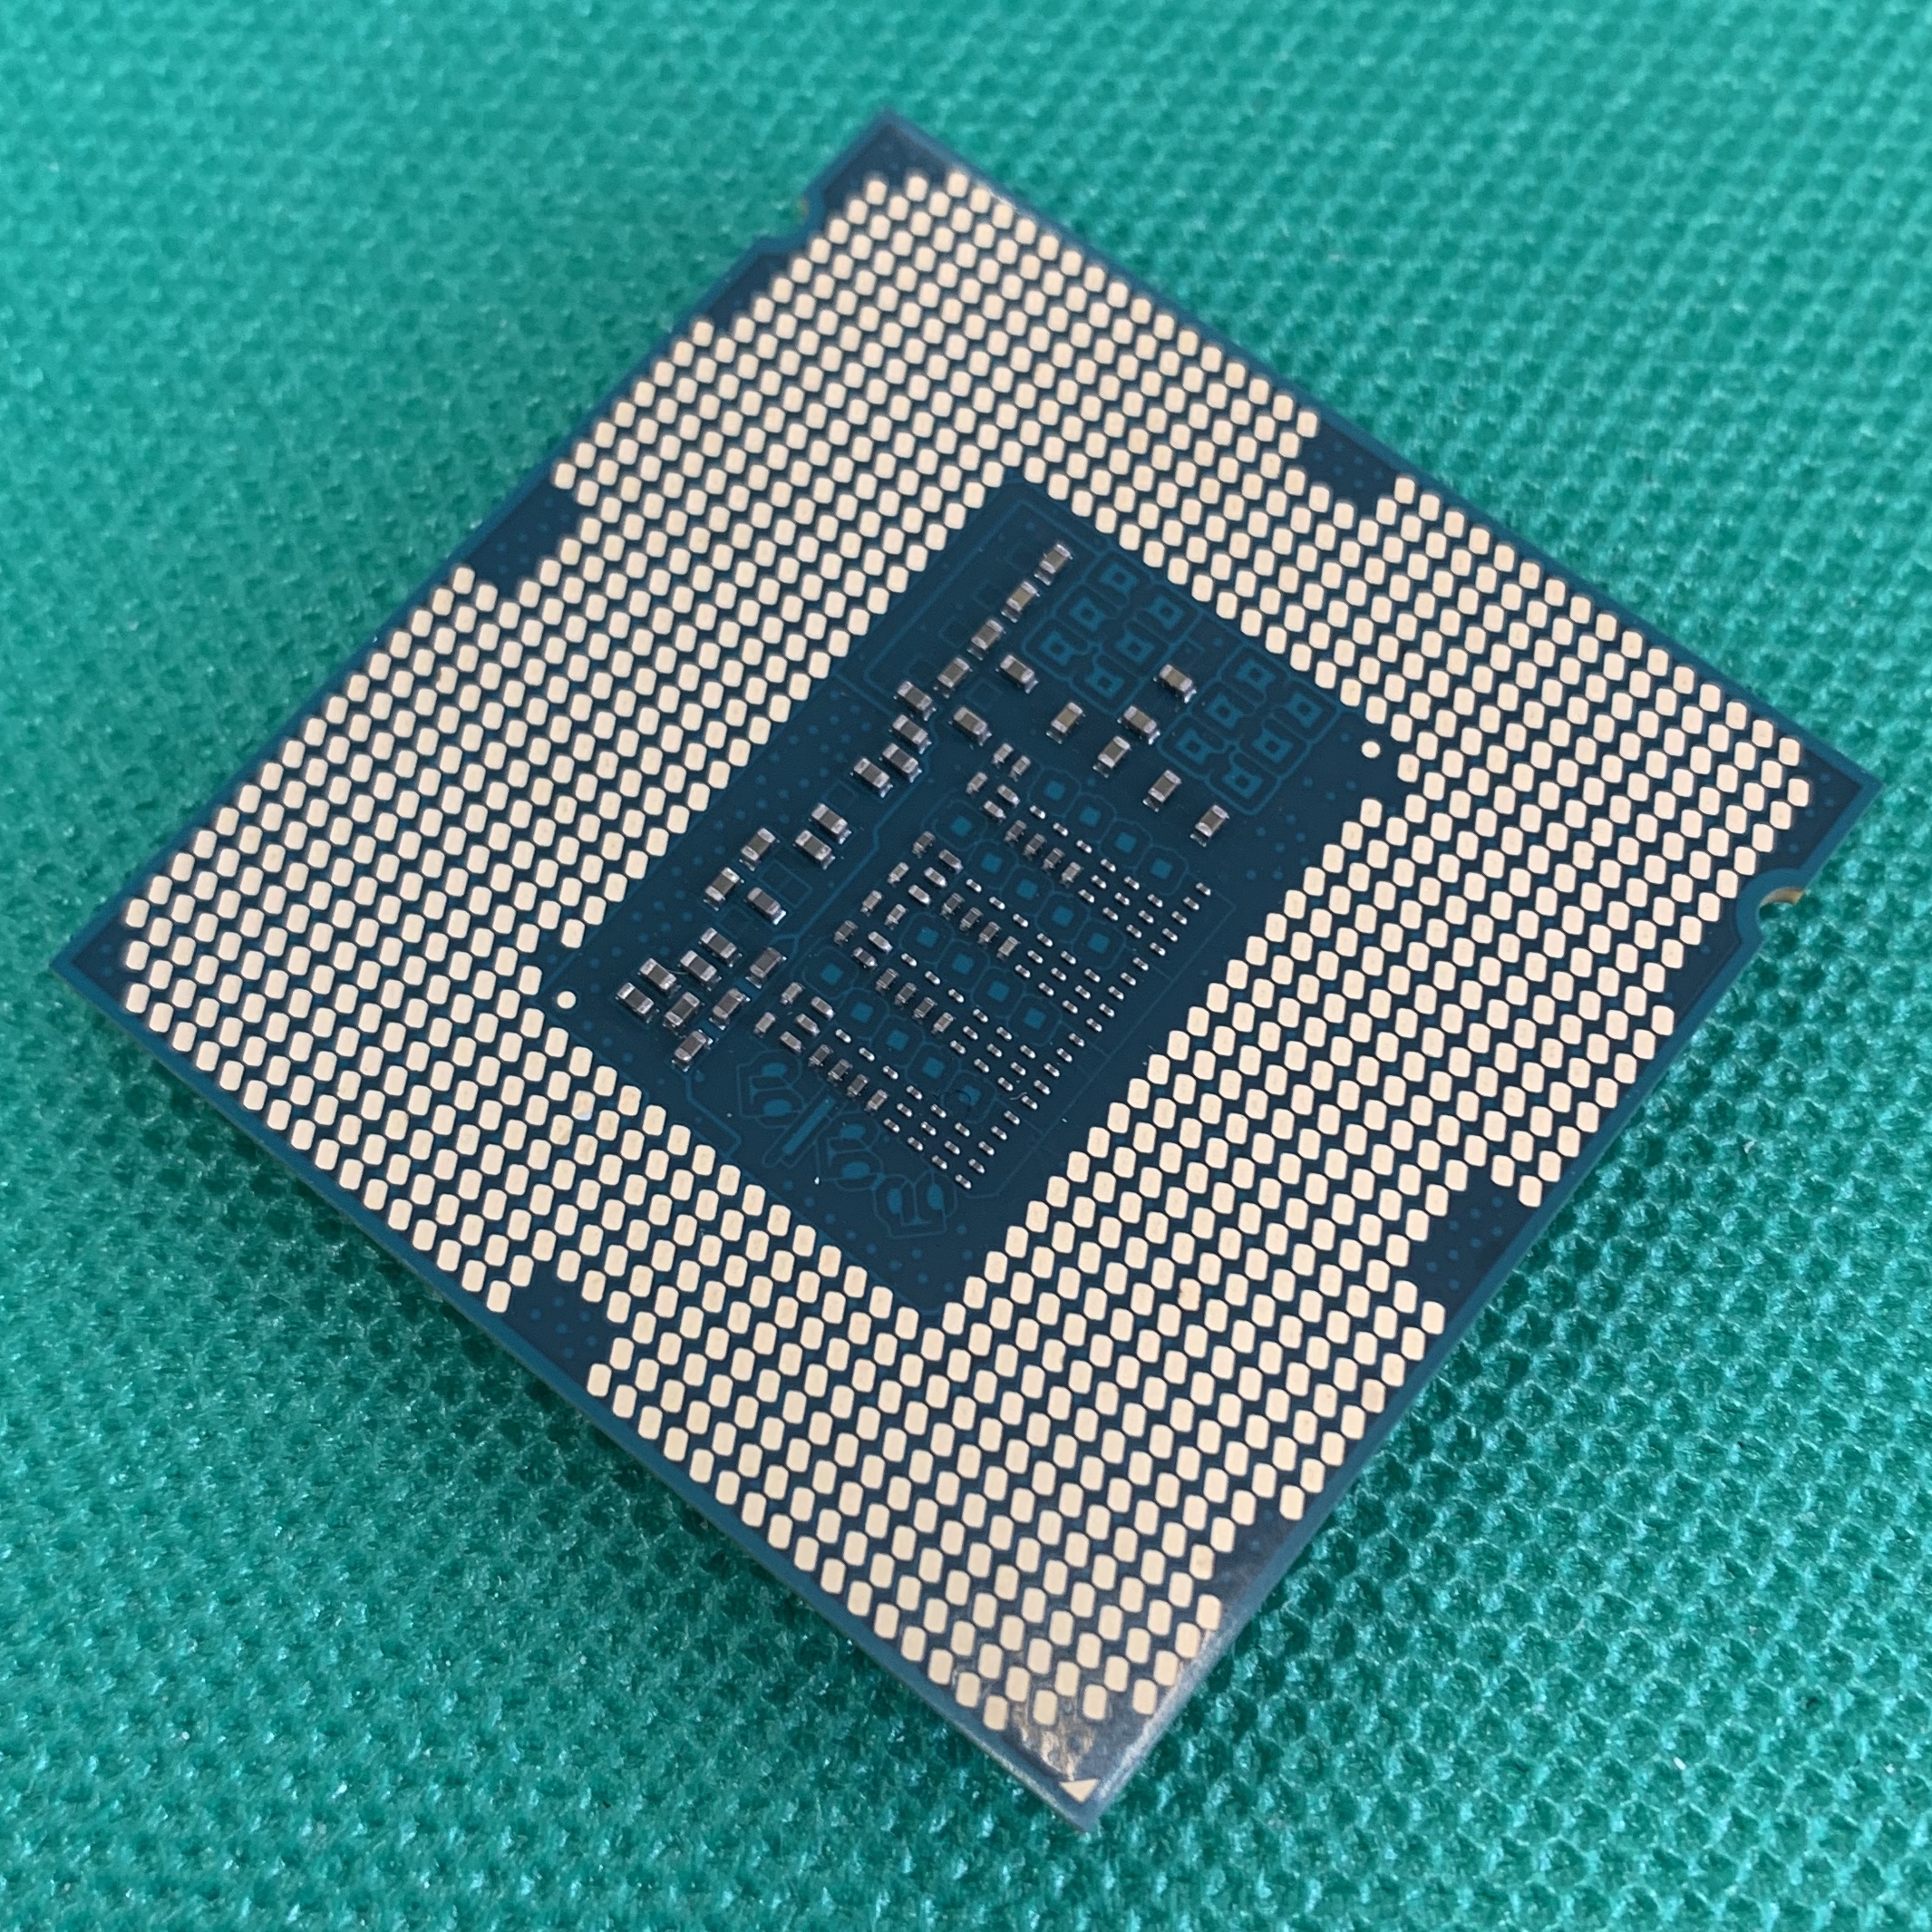 Intel i3 какой сокет. Intel Core i5 LGA. Intel Core i5-4590. I5 4460 сокет. Socket 1150 процессоры.